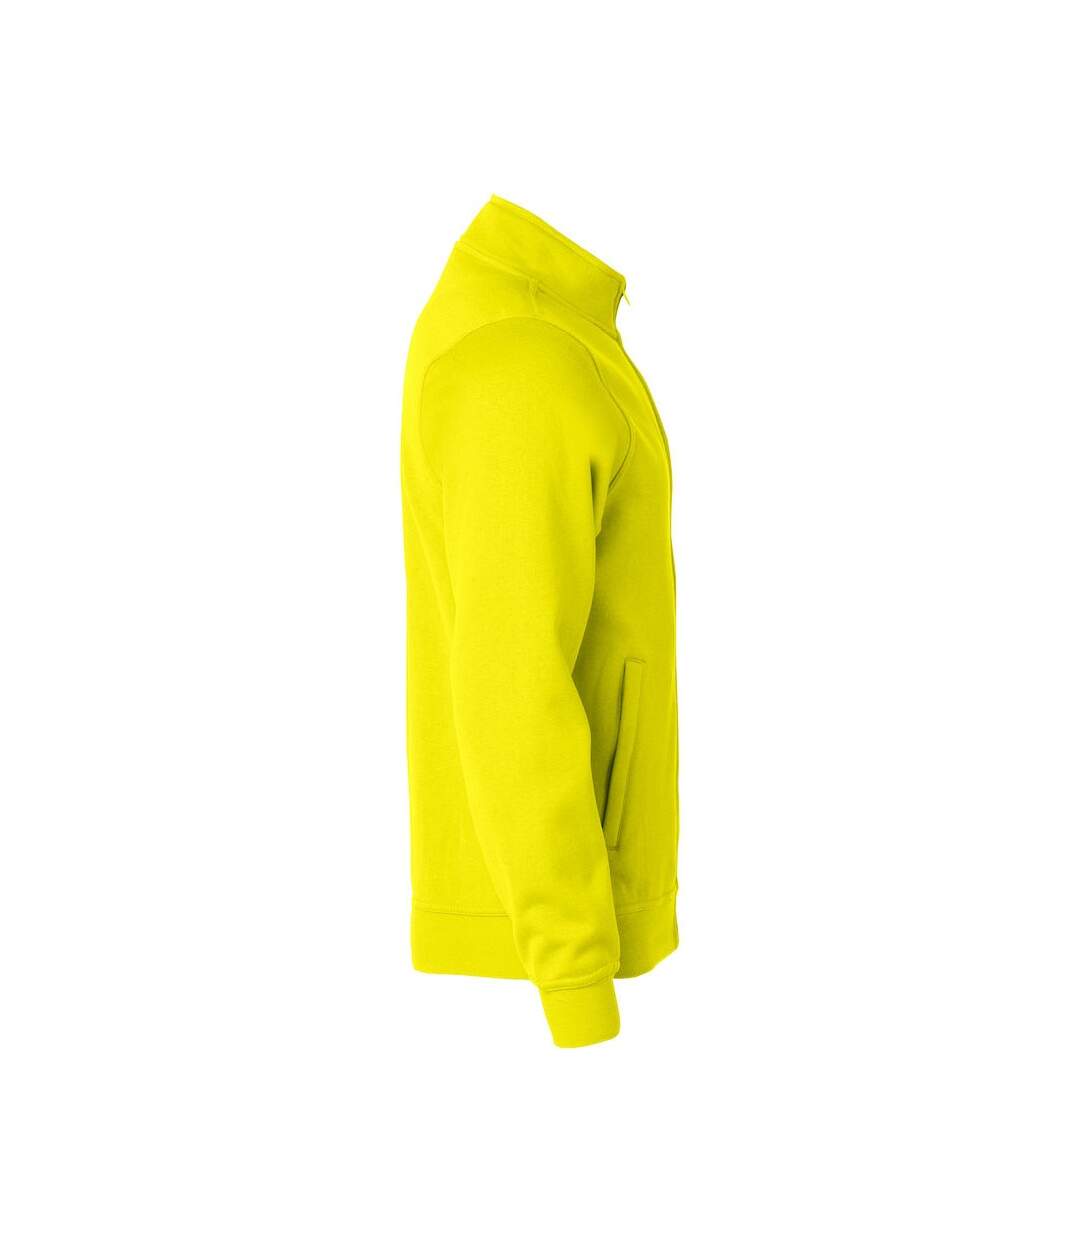 Clique Mens Full Zip Jacket (Visibility Yellow)